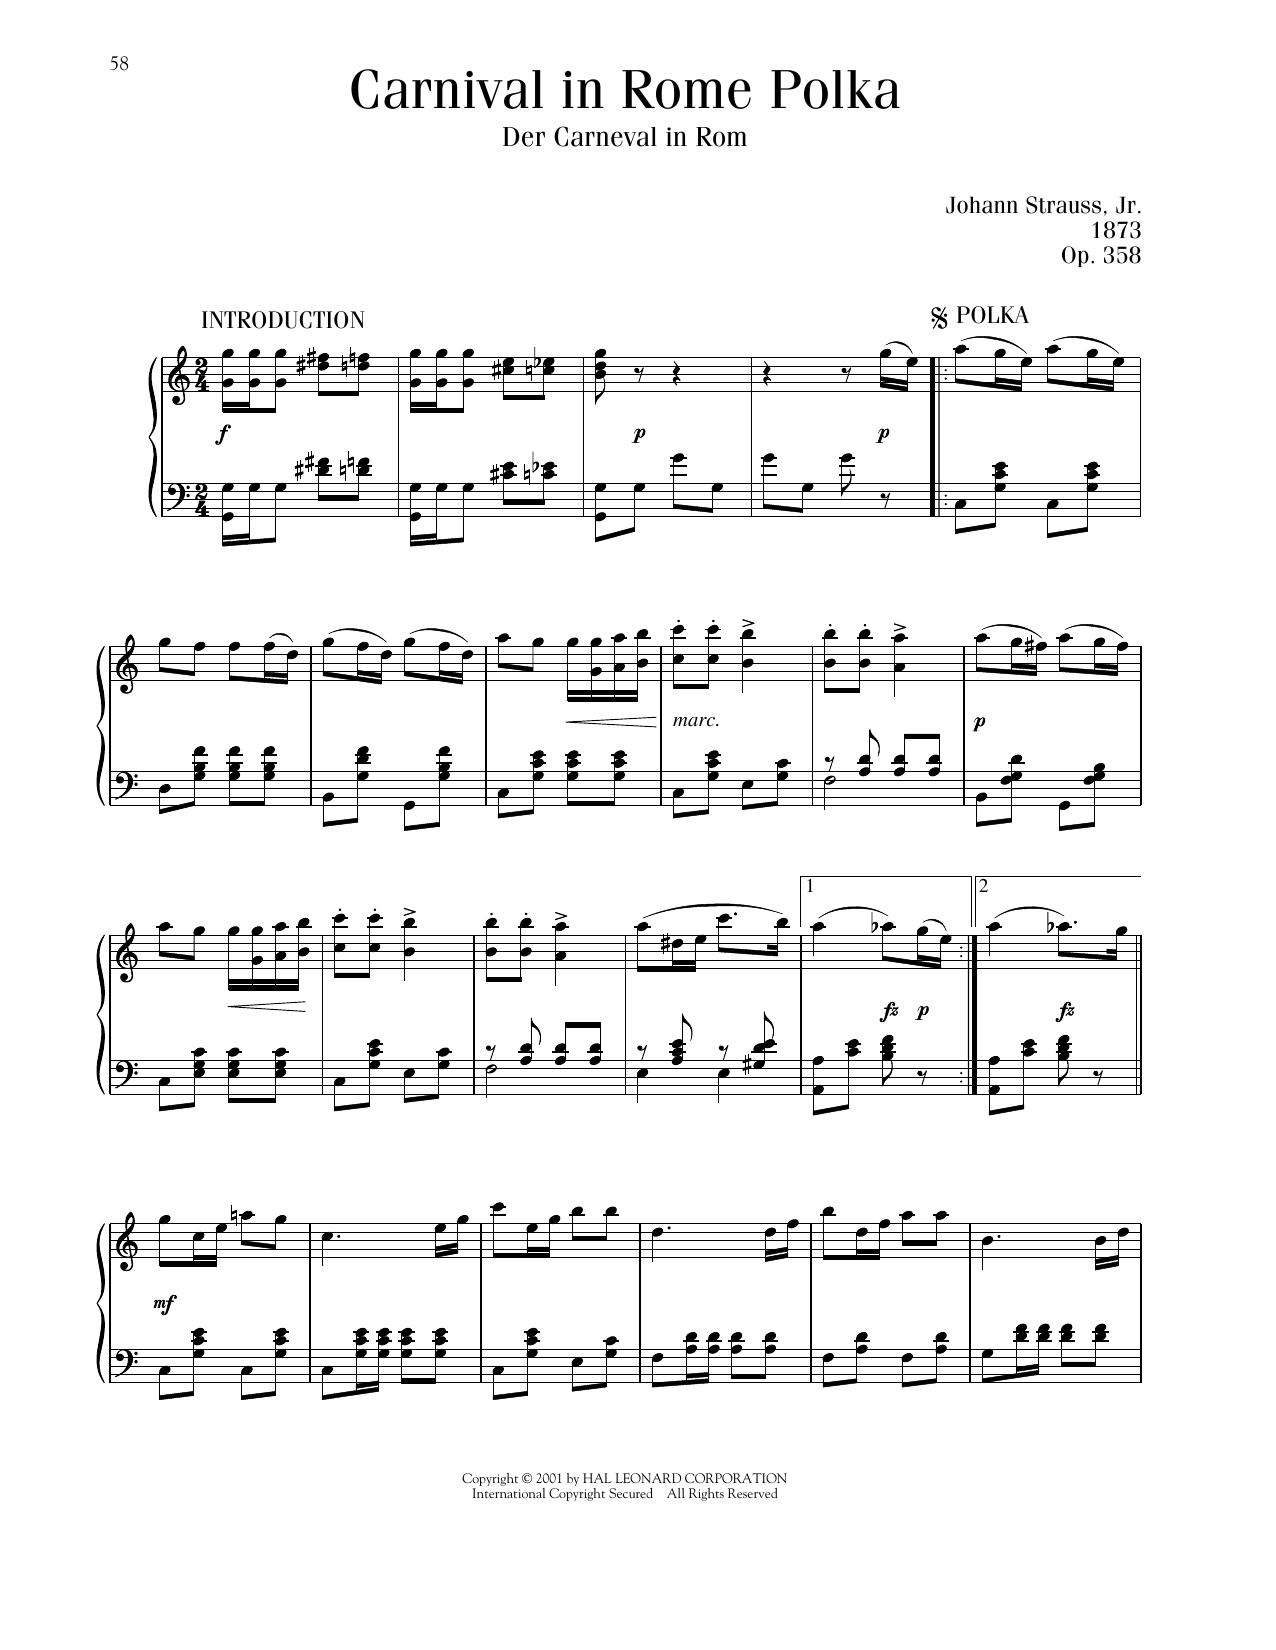 Johann Strauss Carnival In Rome Polka, Op. 358 sheet music notes printable PDF score